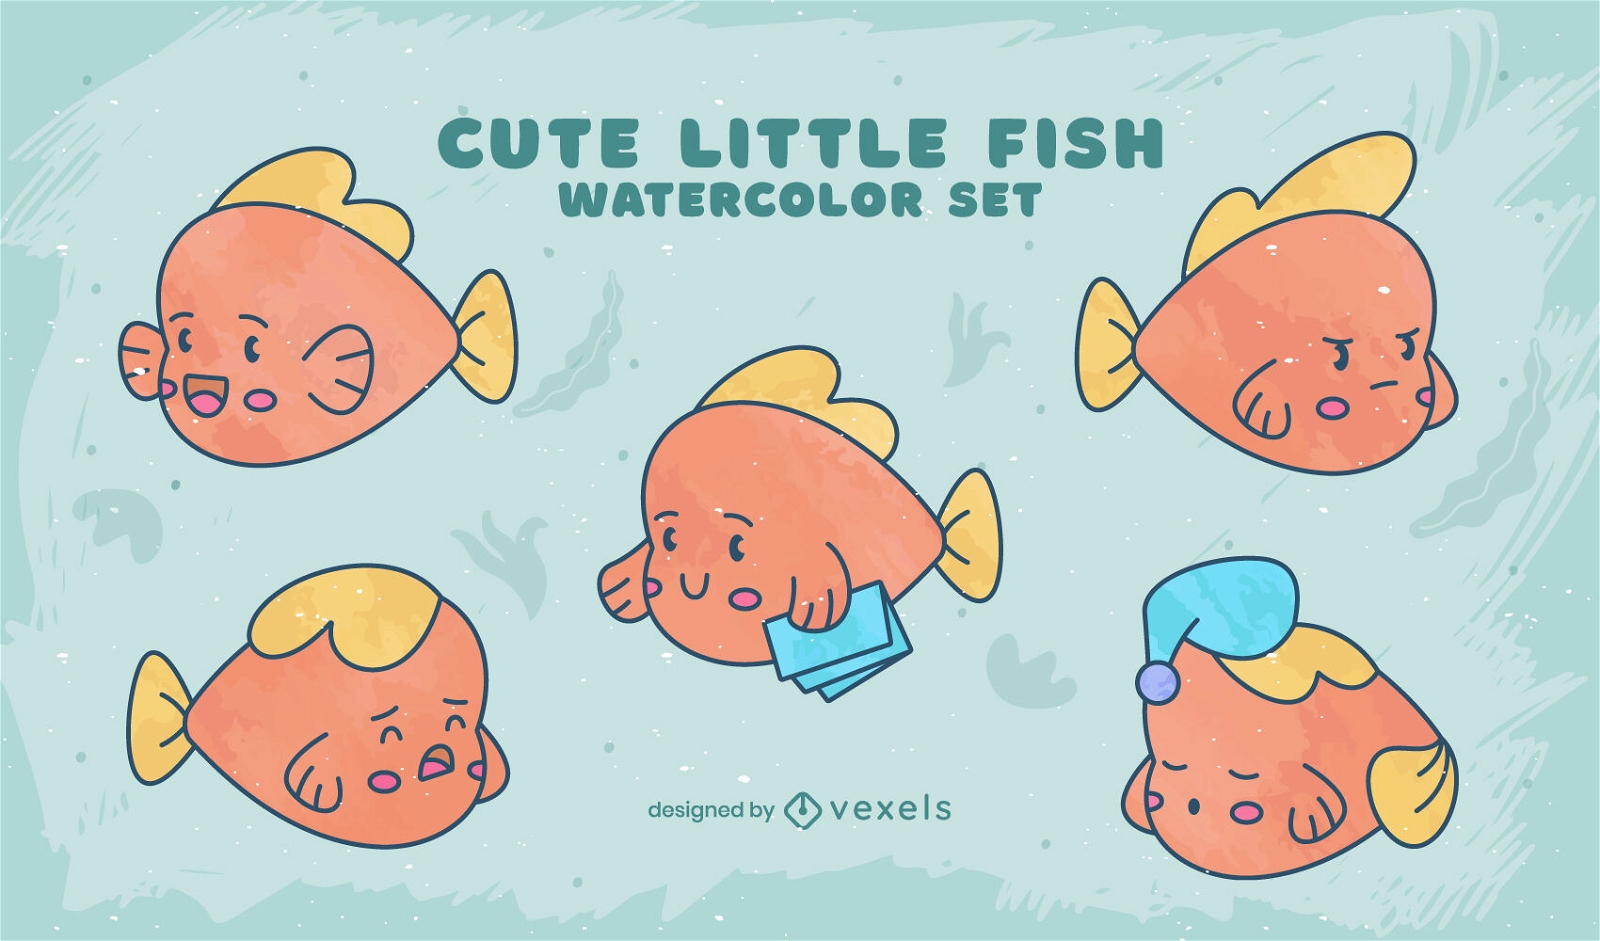 Cute little fish character set